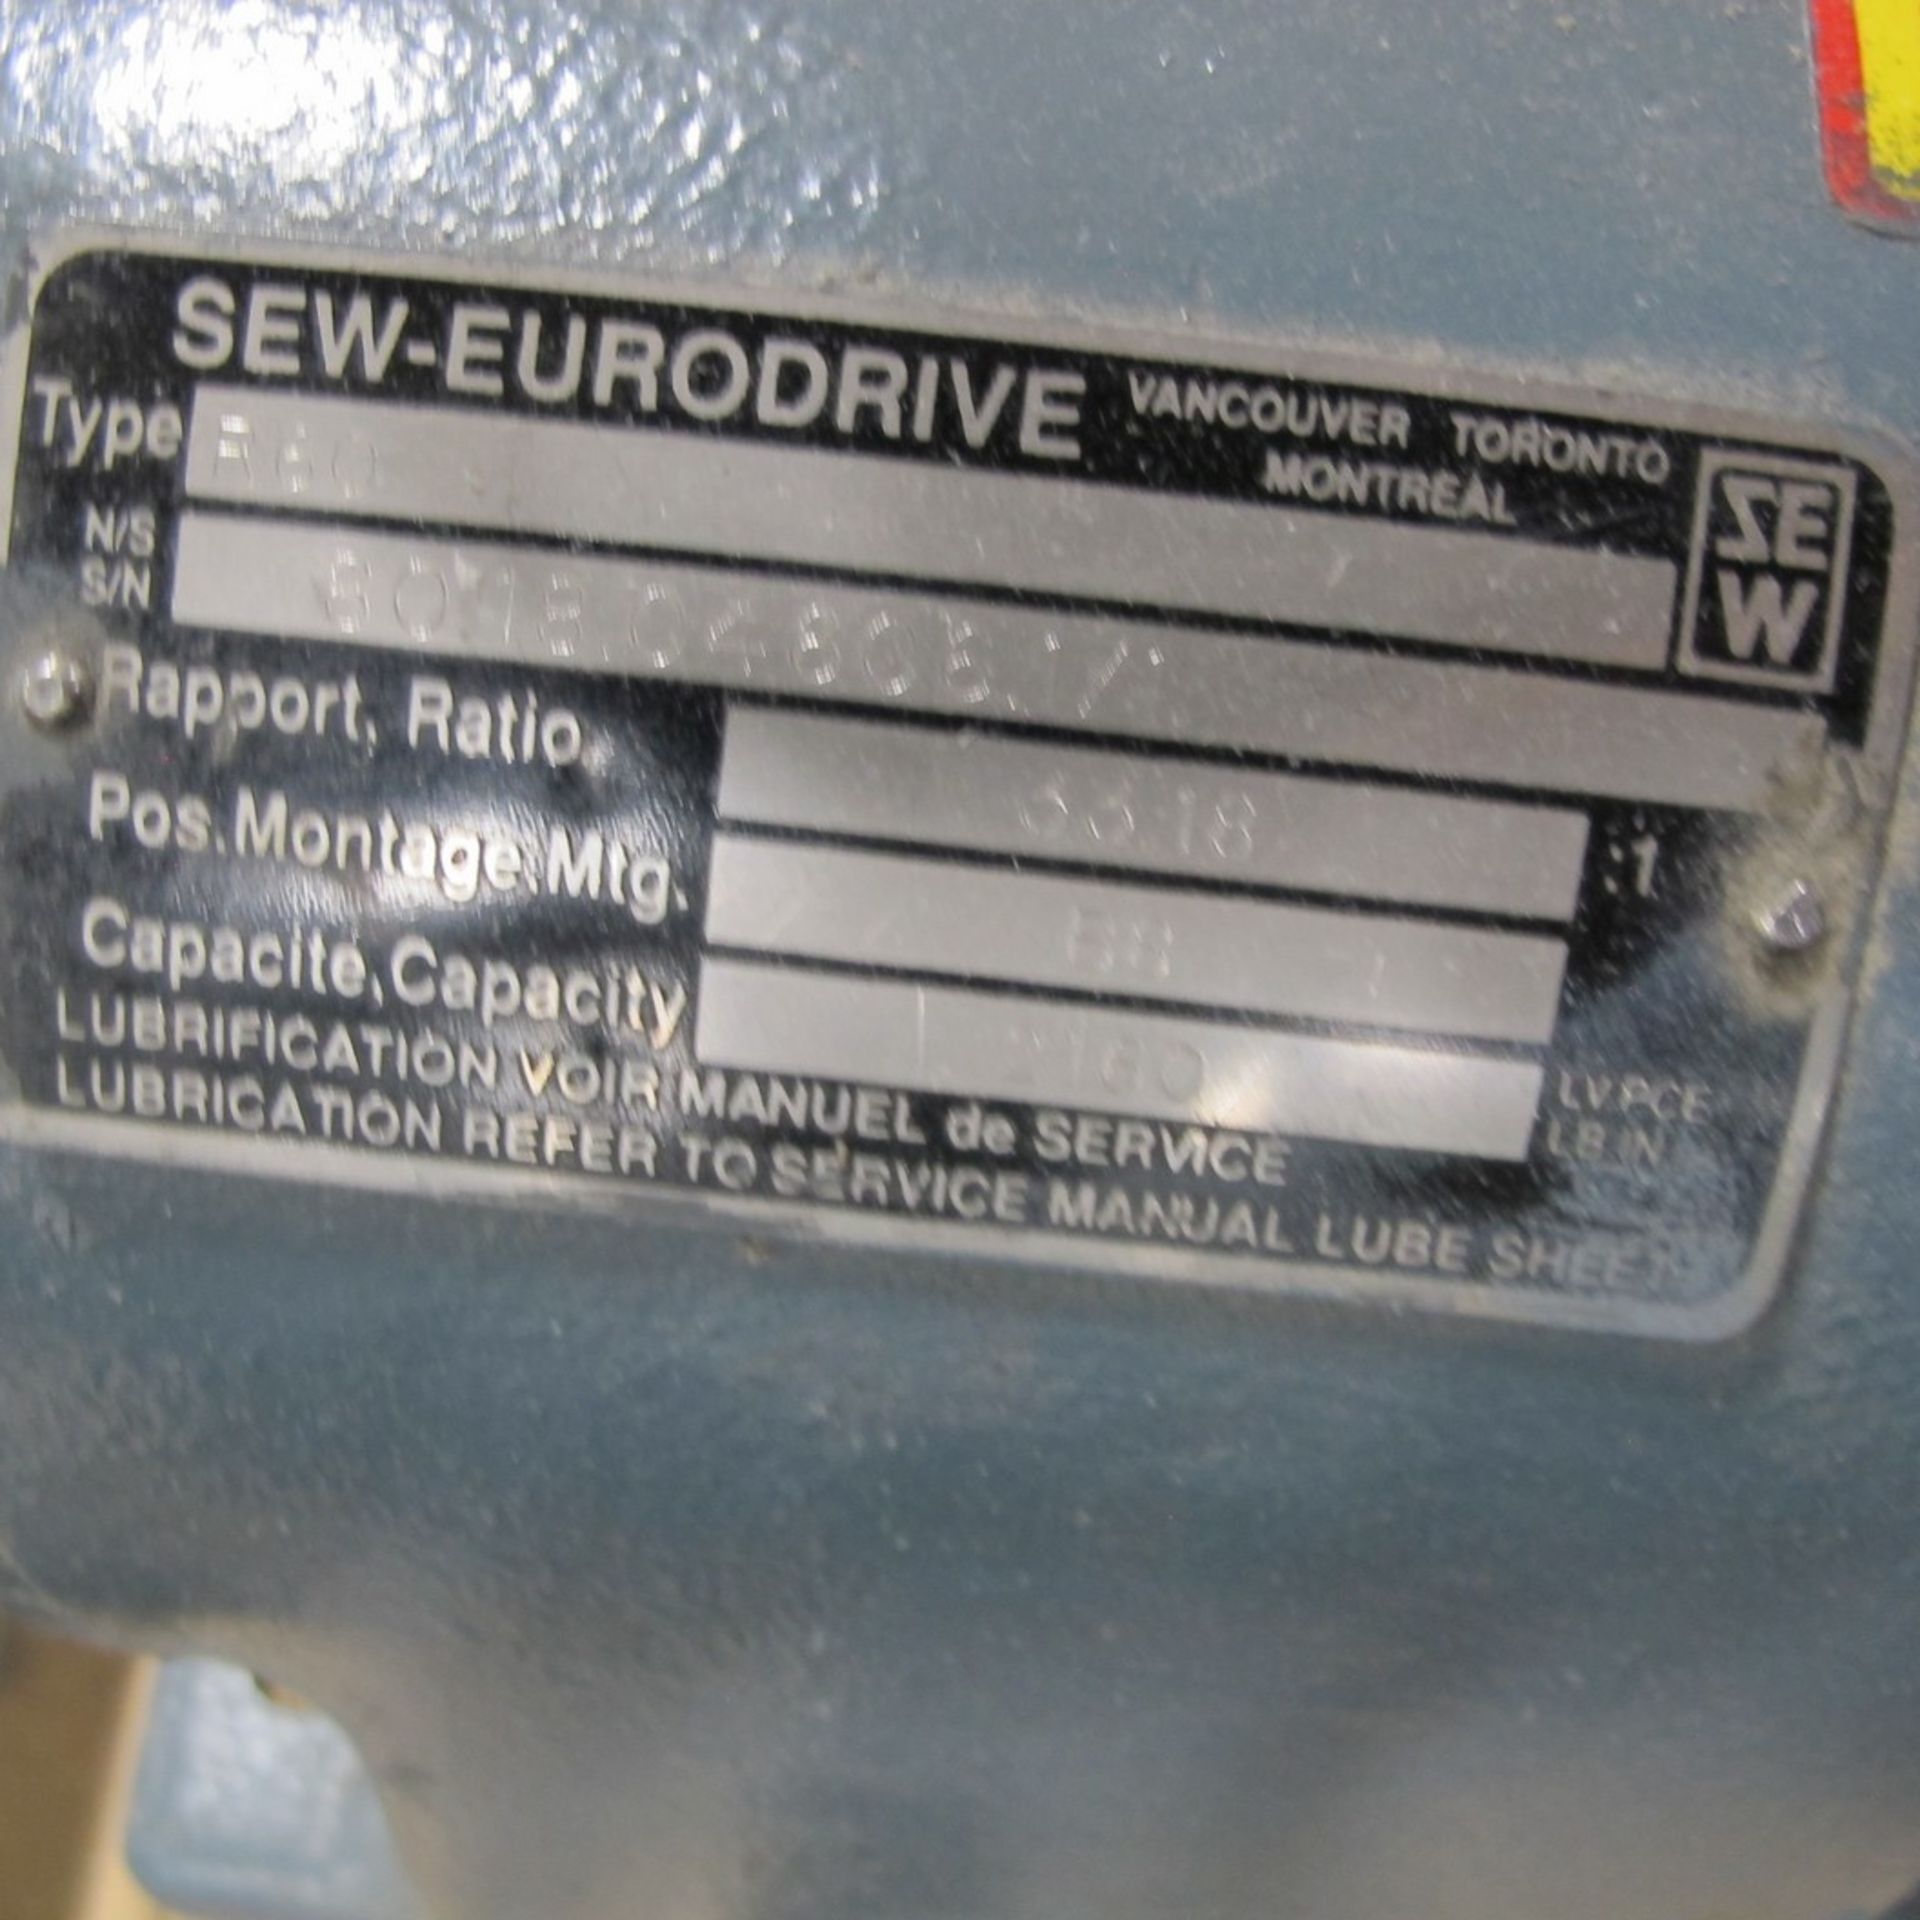 SEW-EURODRIVE SERVO MOTOR, GFN80N3N/HF, 011030669.0.01.01003, 0.5HP, 2,150 RPM W/ GEARBOX/REDUCER ( - Image 2 of 3